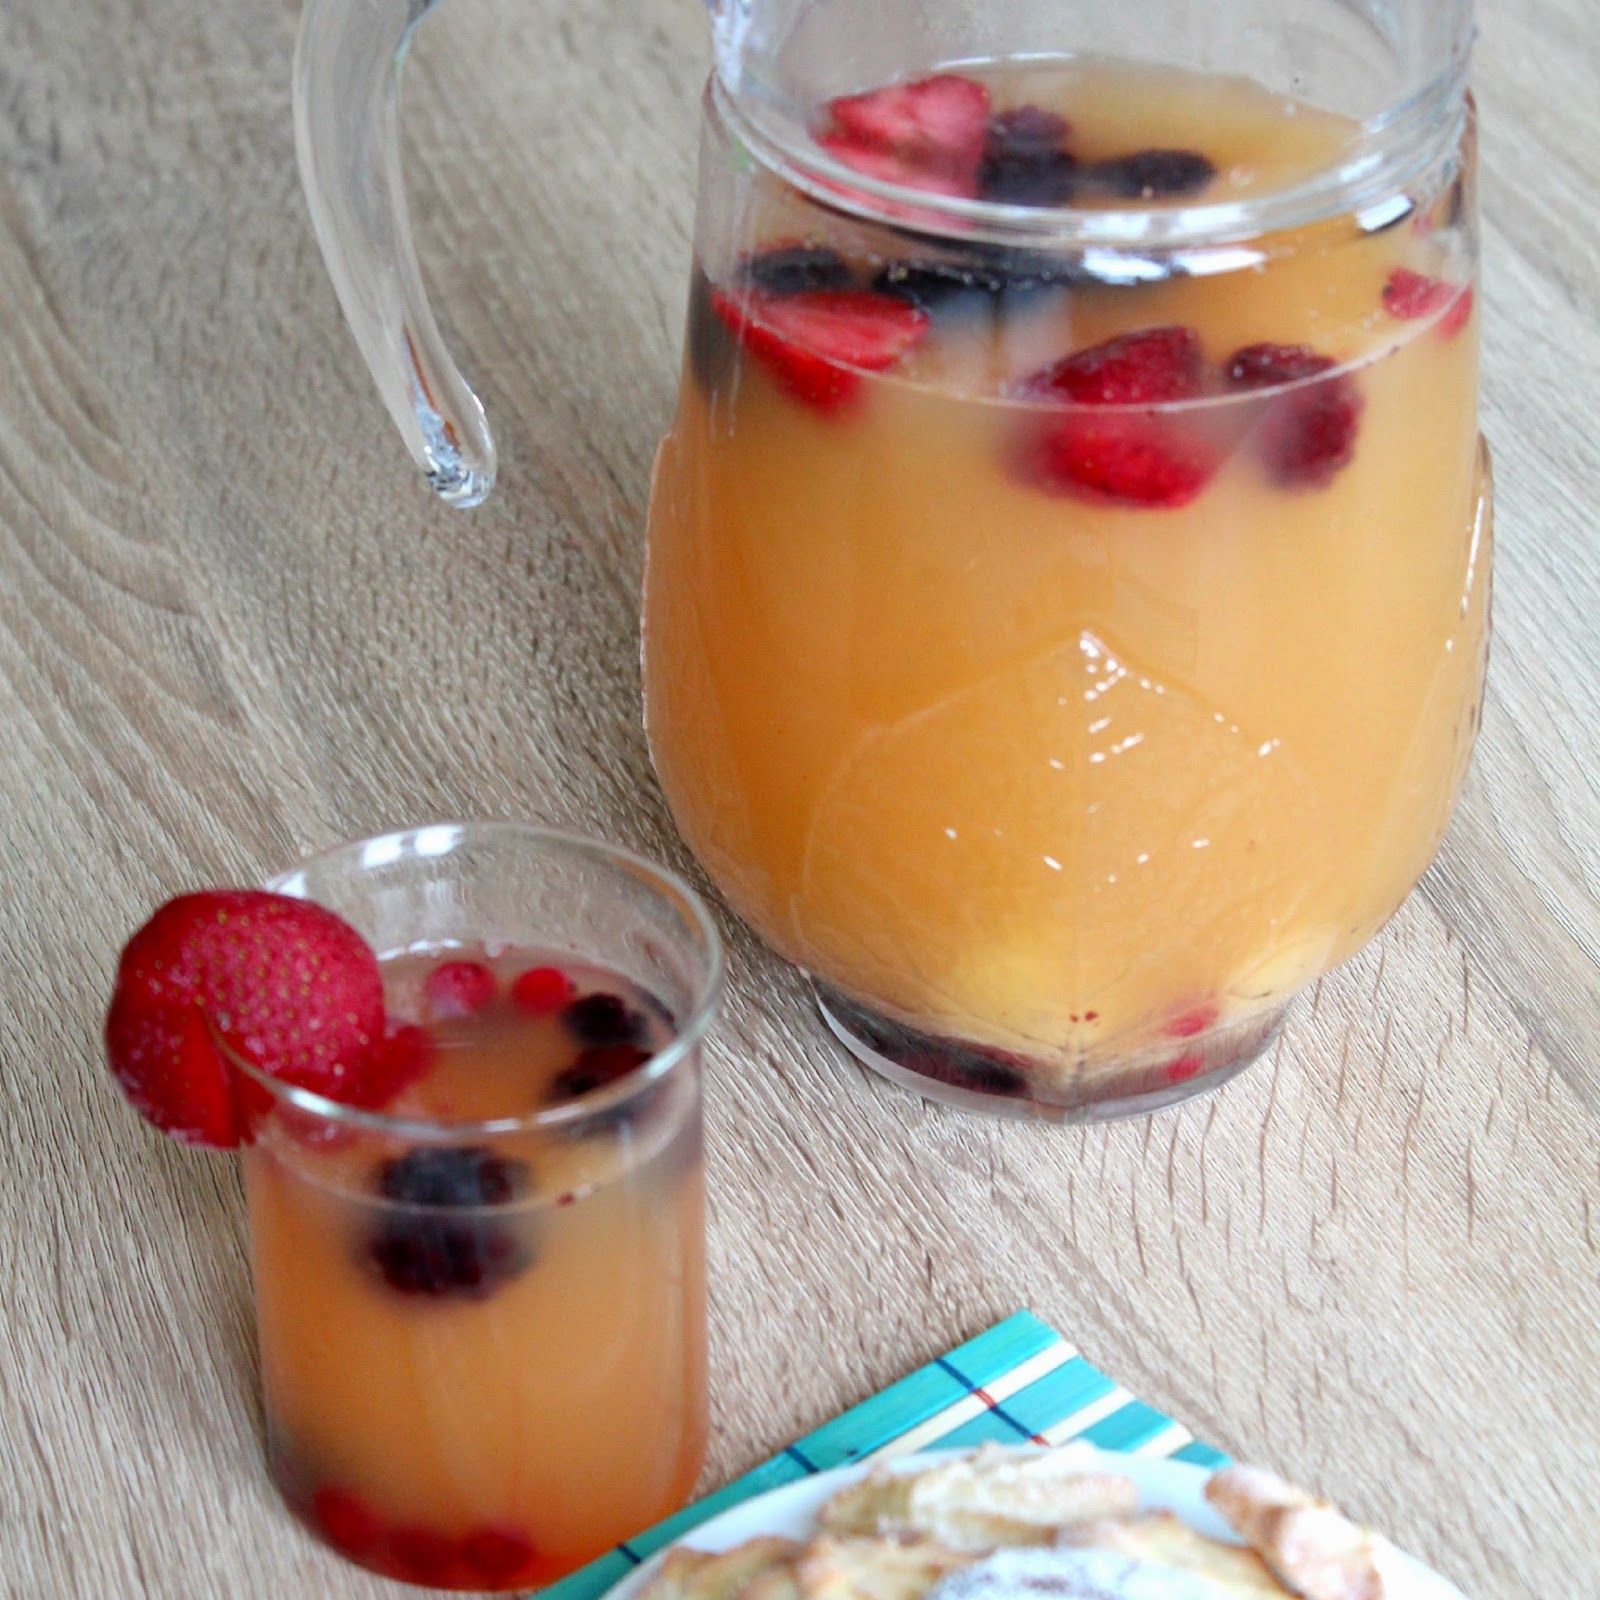 http://theseamanmom.com/fruit-juice-based-cocktails/